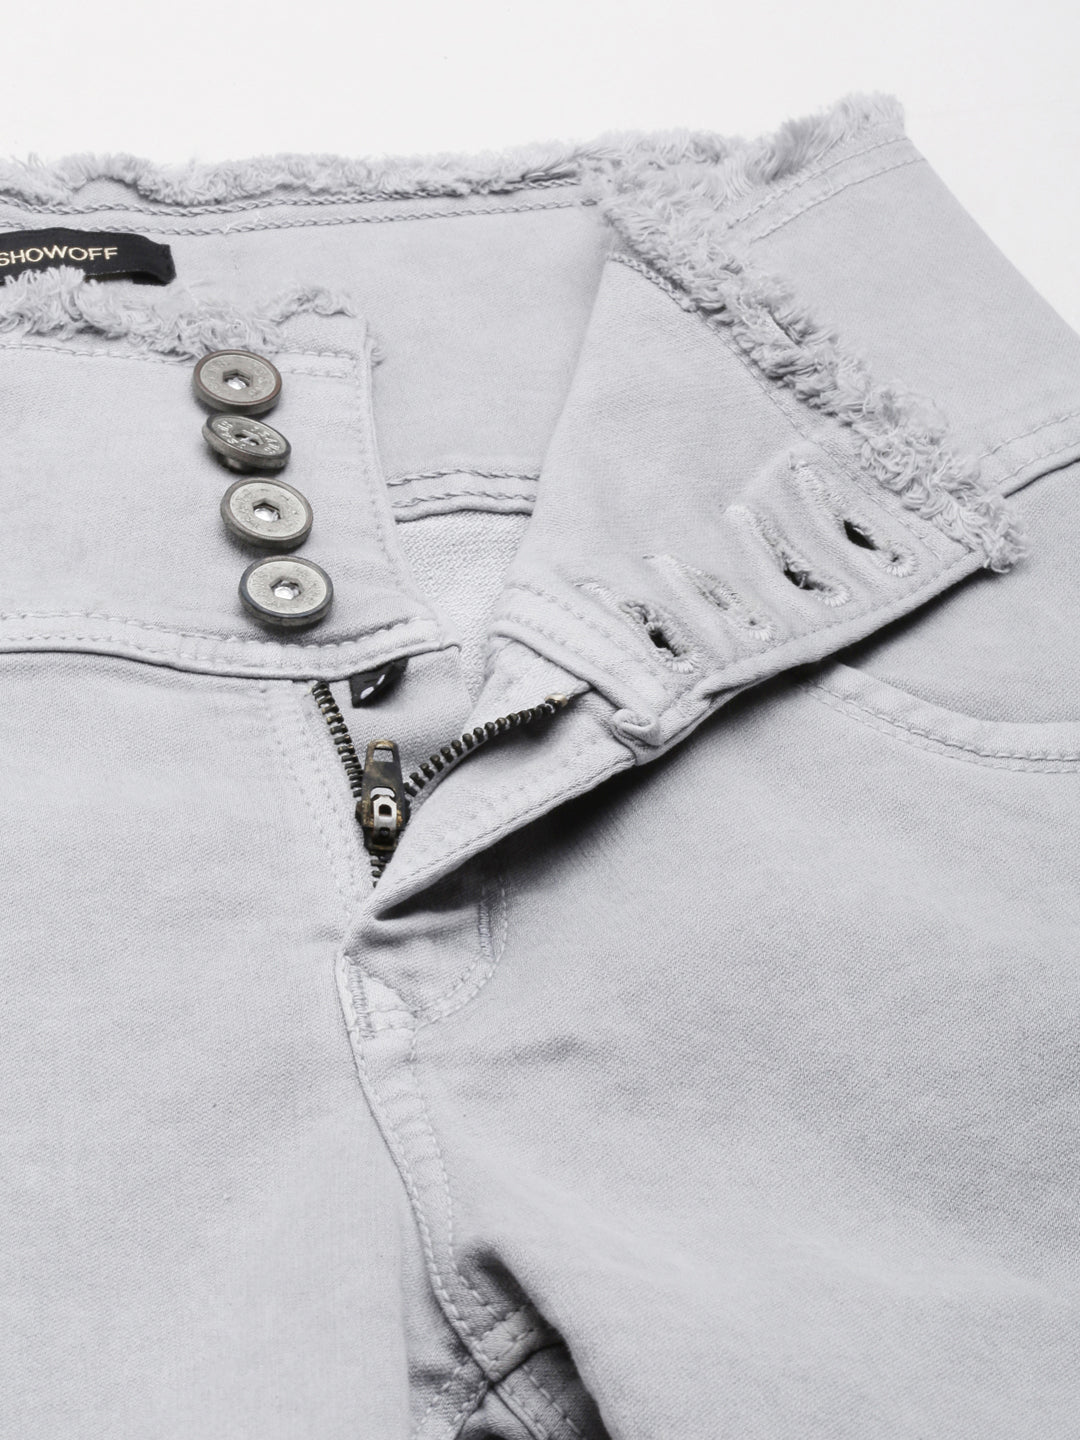 Women Grey Solid Denim Shorts